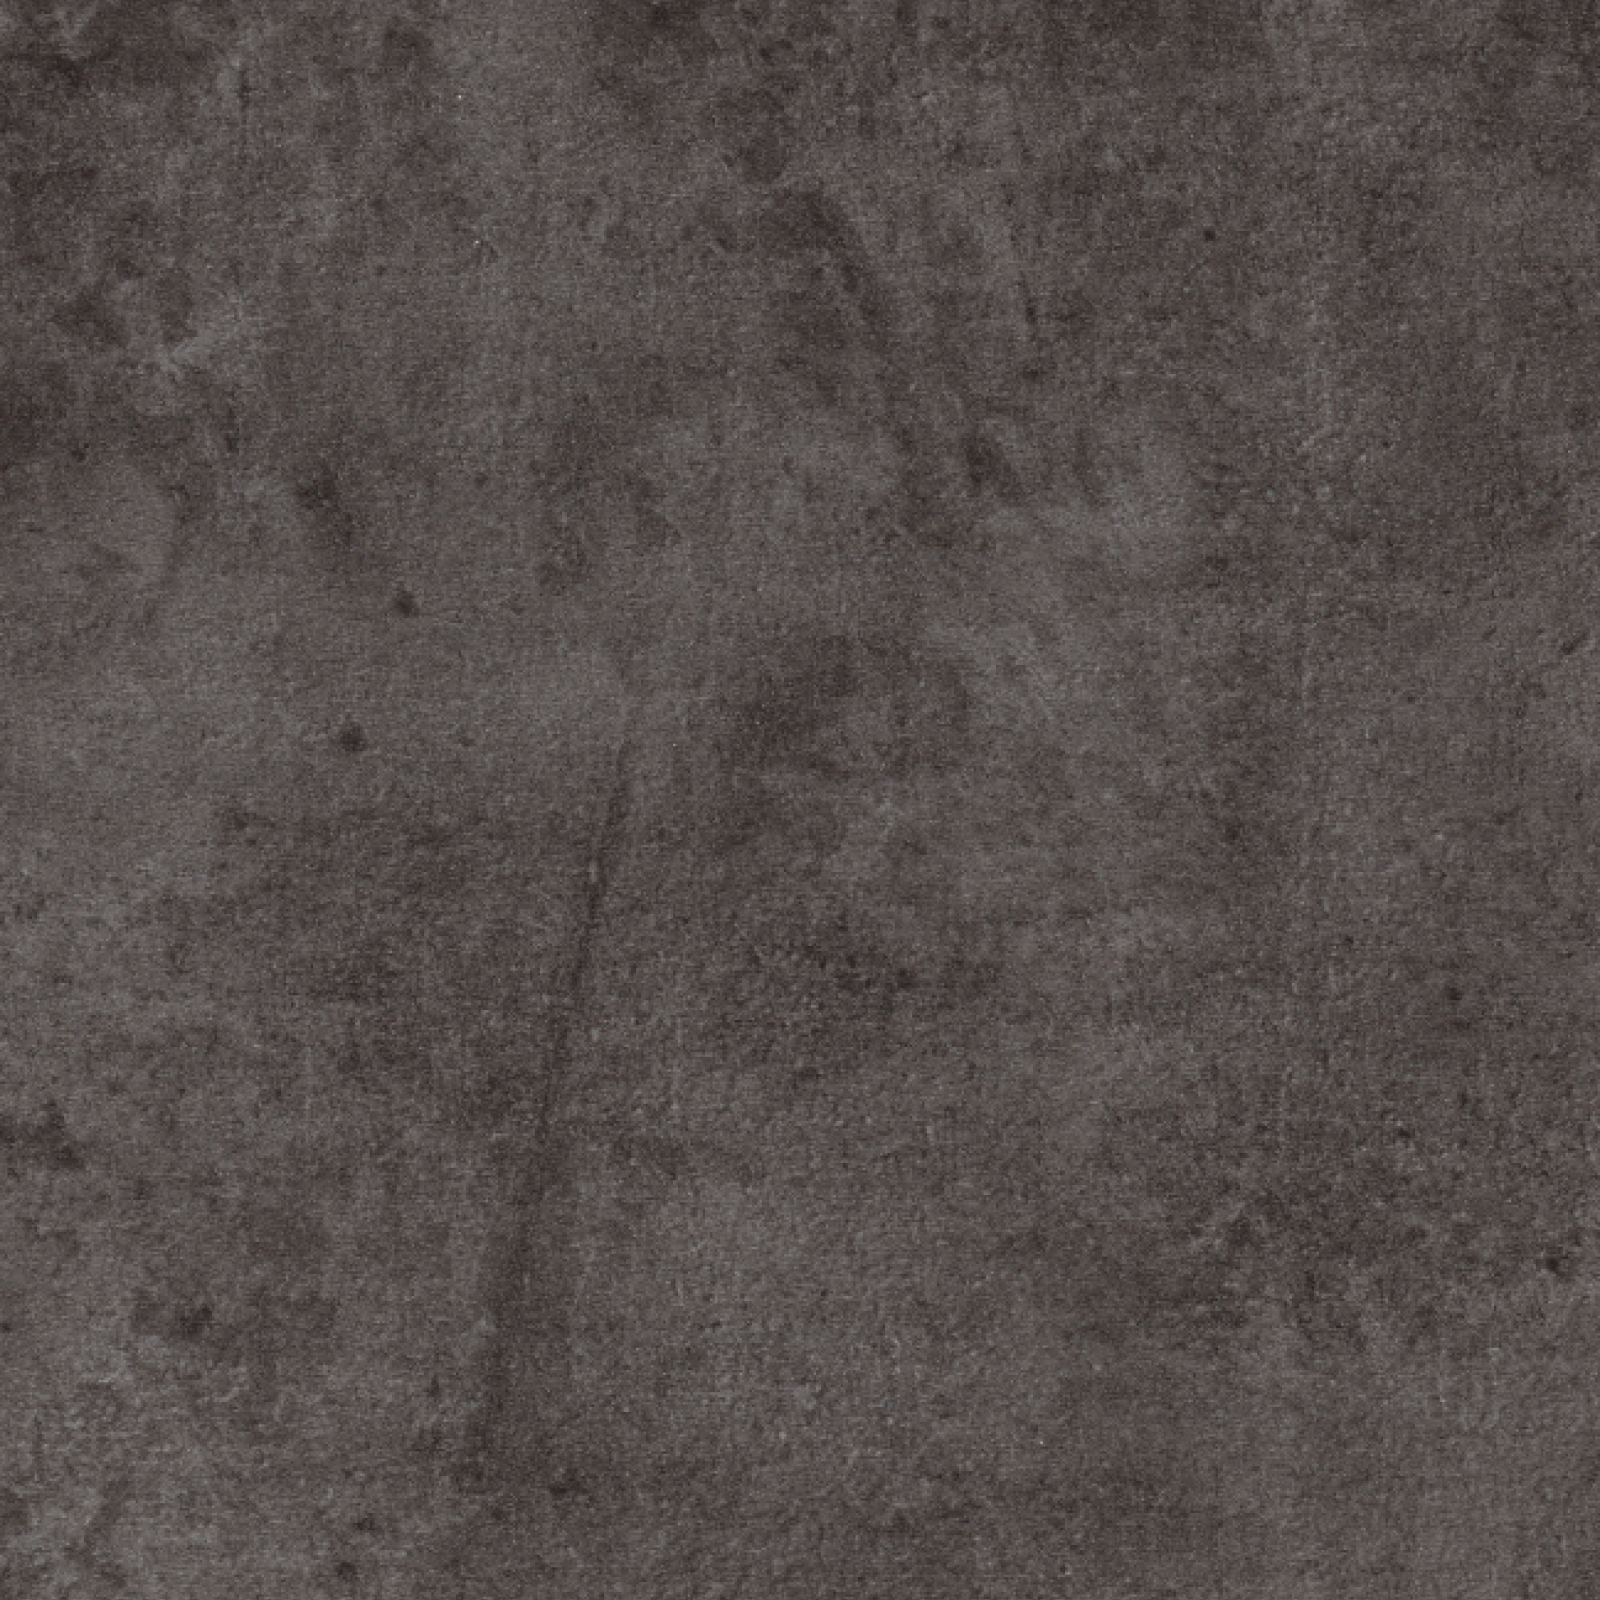 Vzor - 13032 anthracite concrete